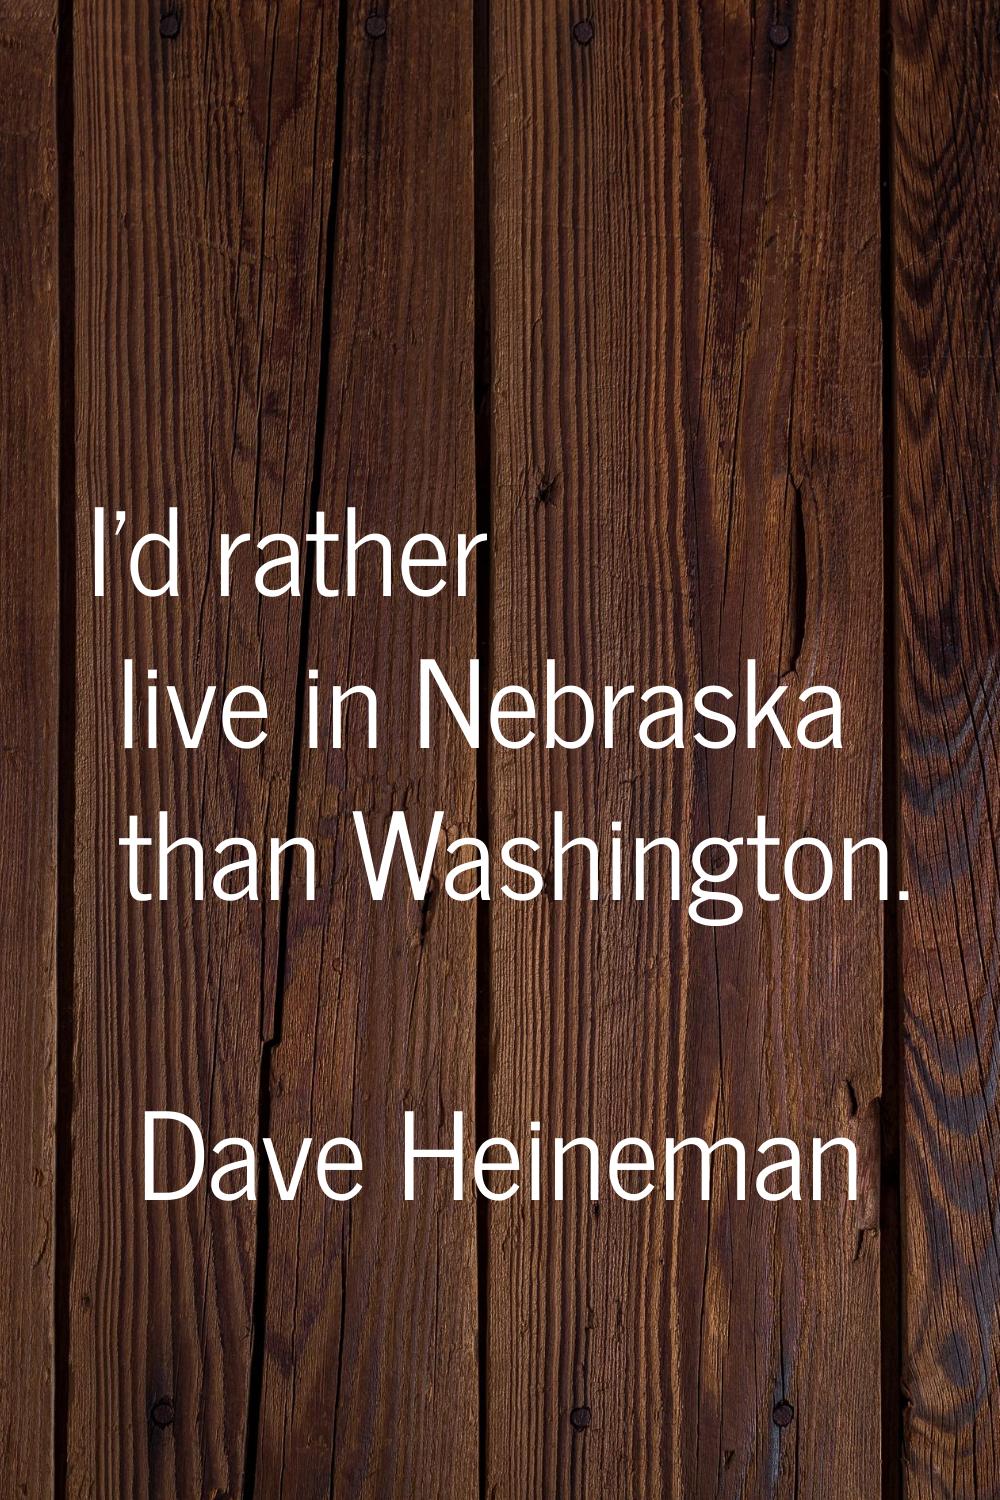 I'd rather live in Nebraska than Washington.